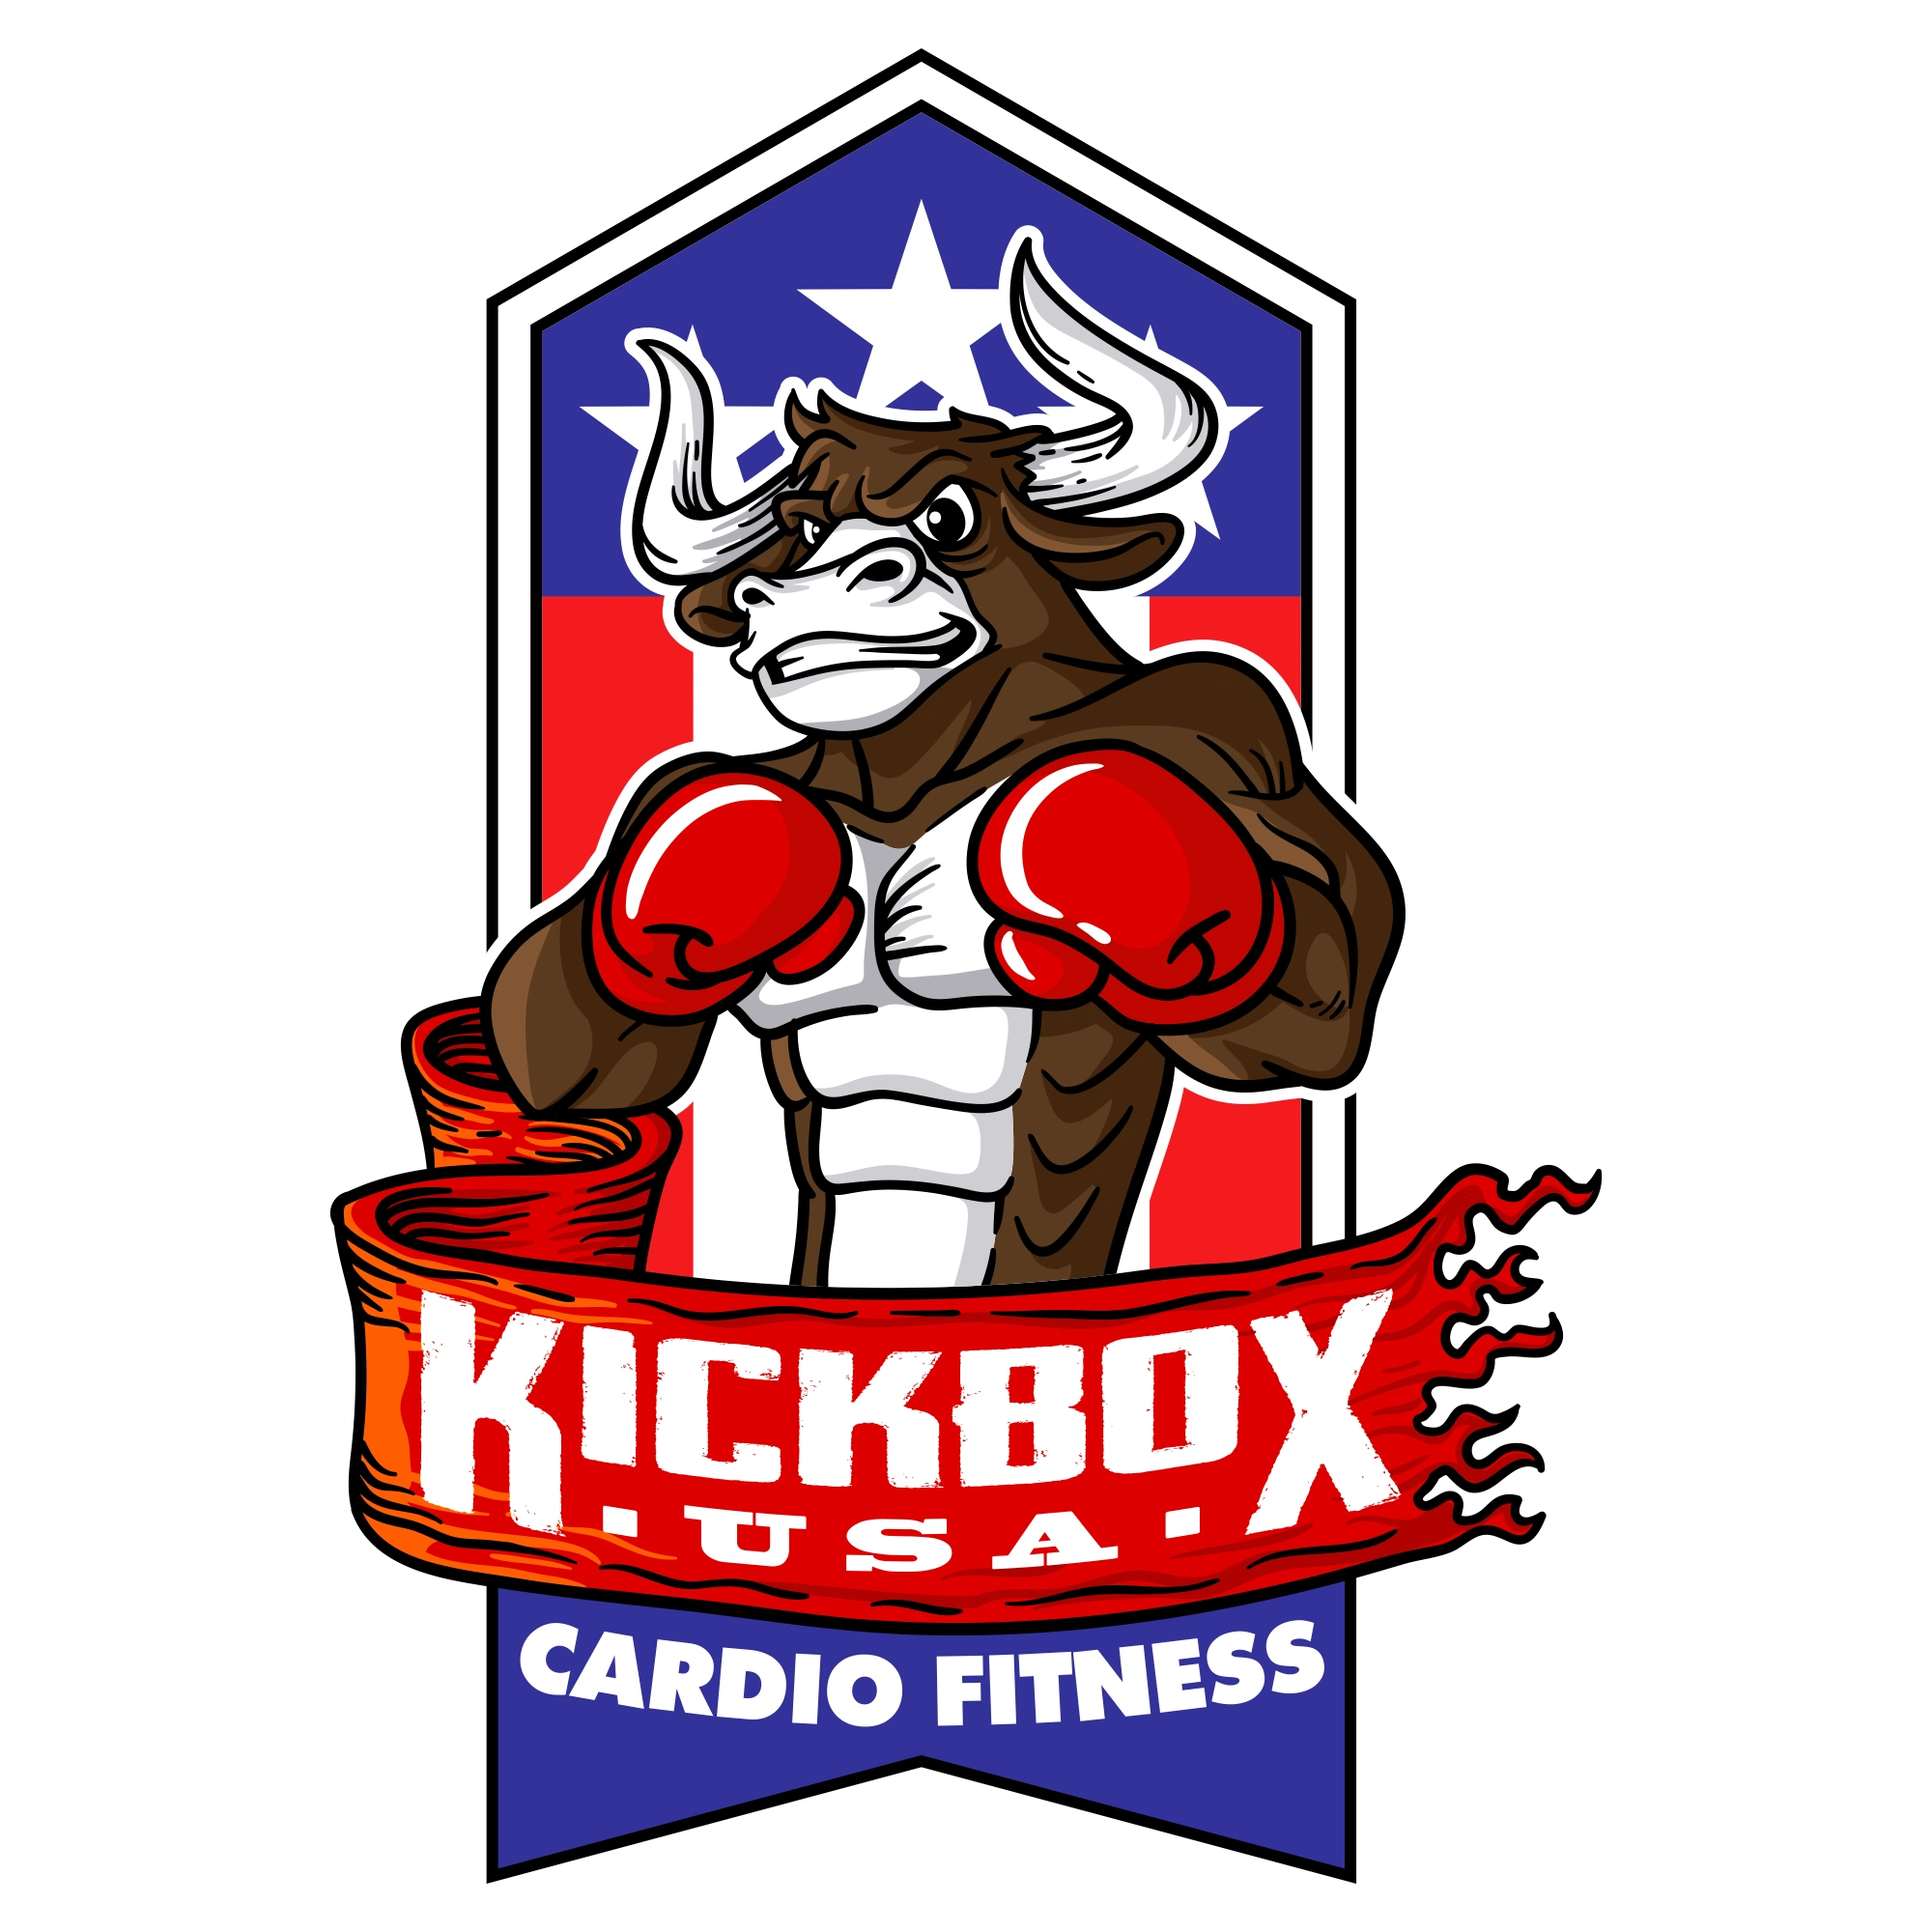 Kickbox USA